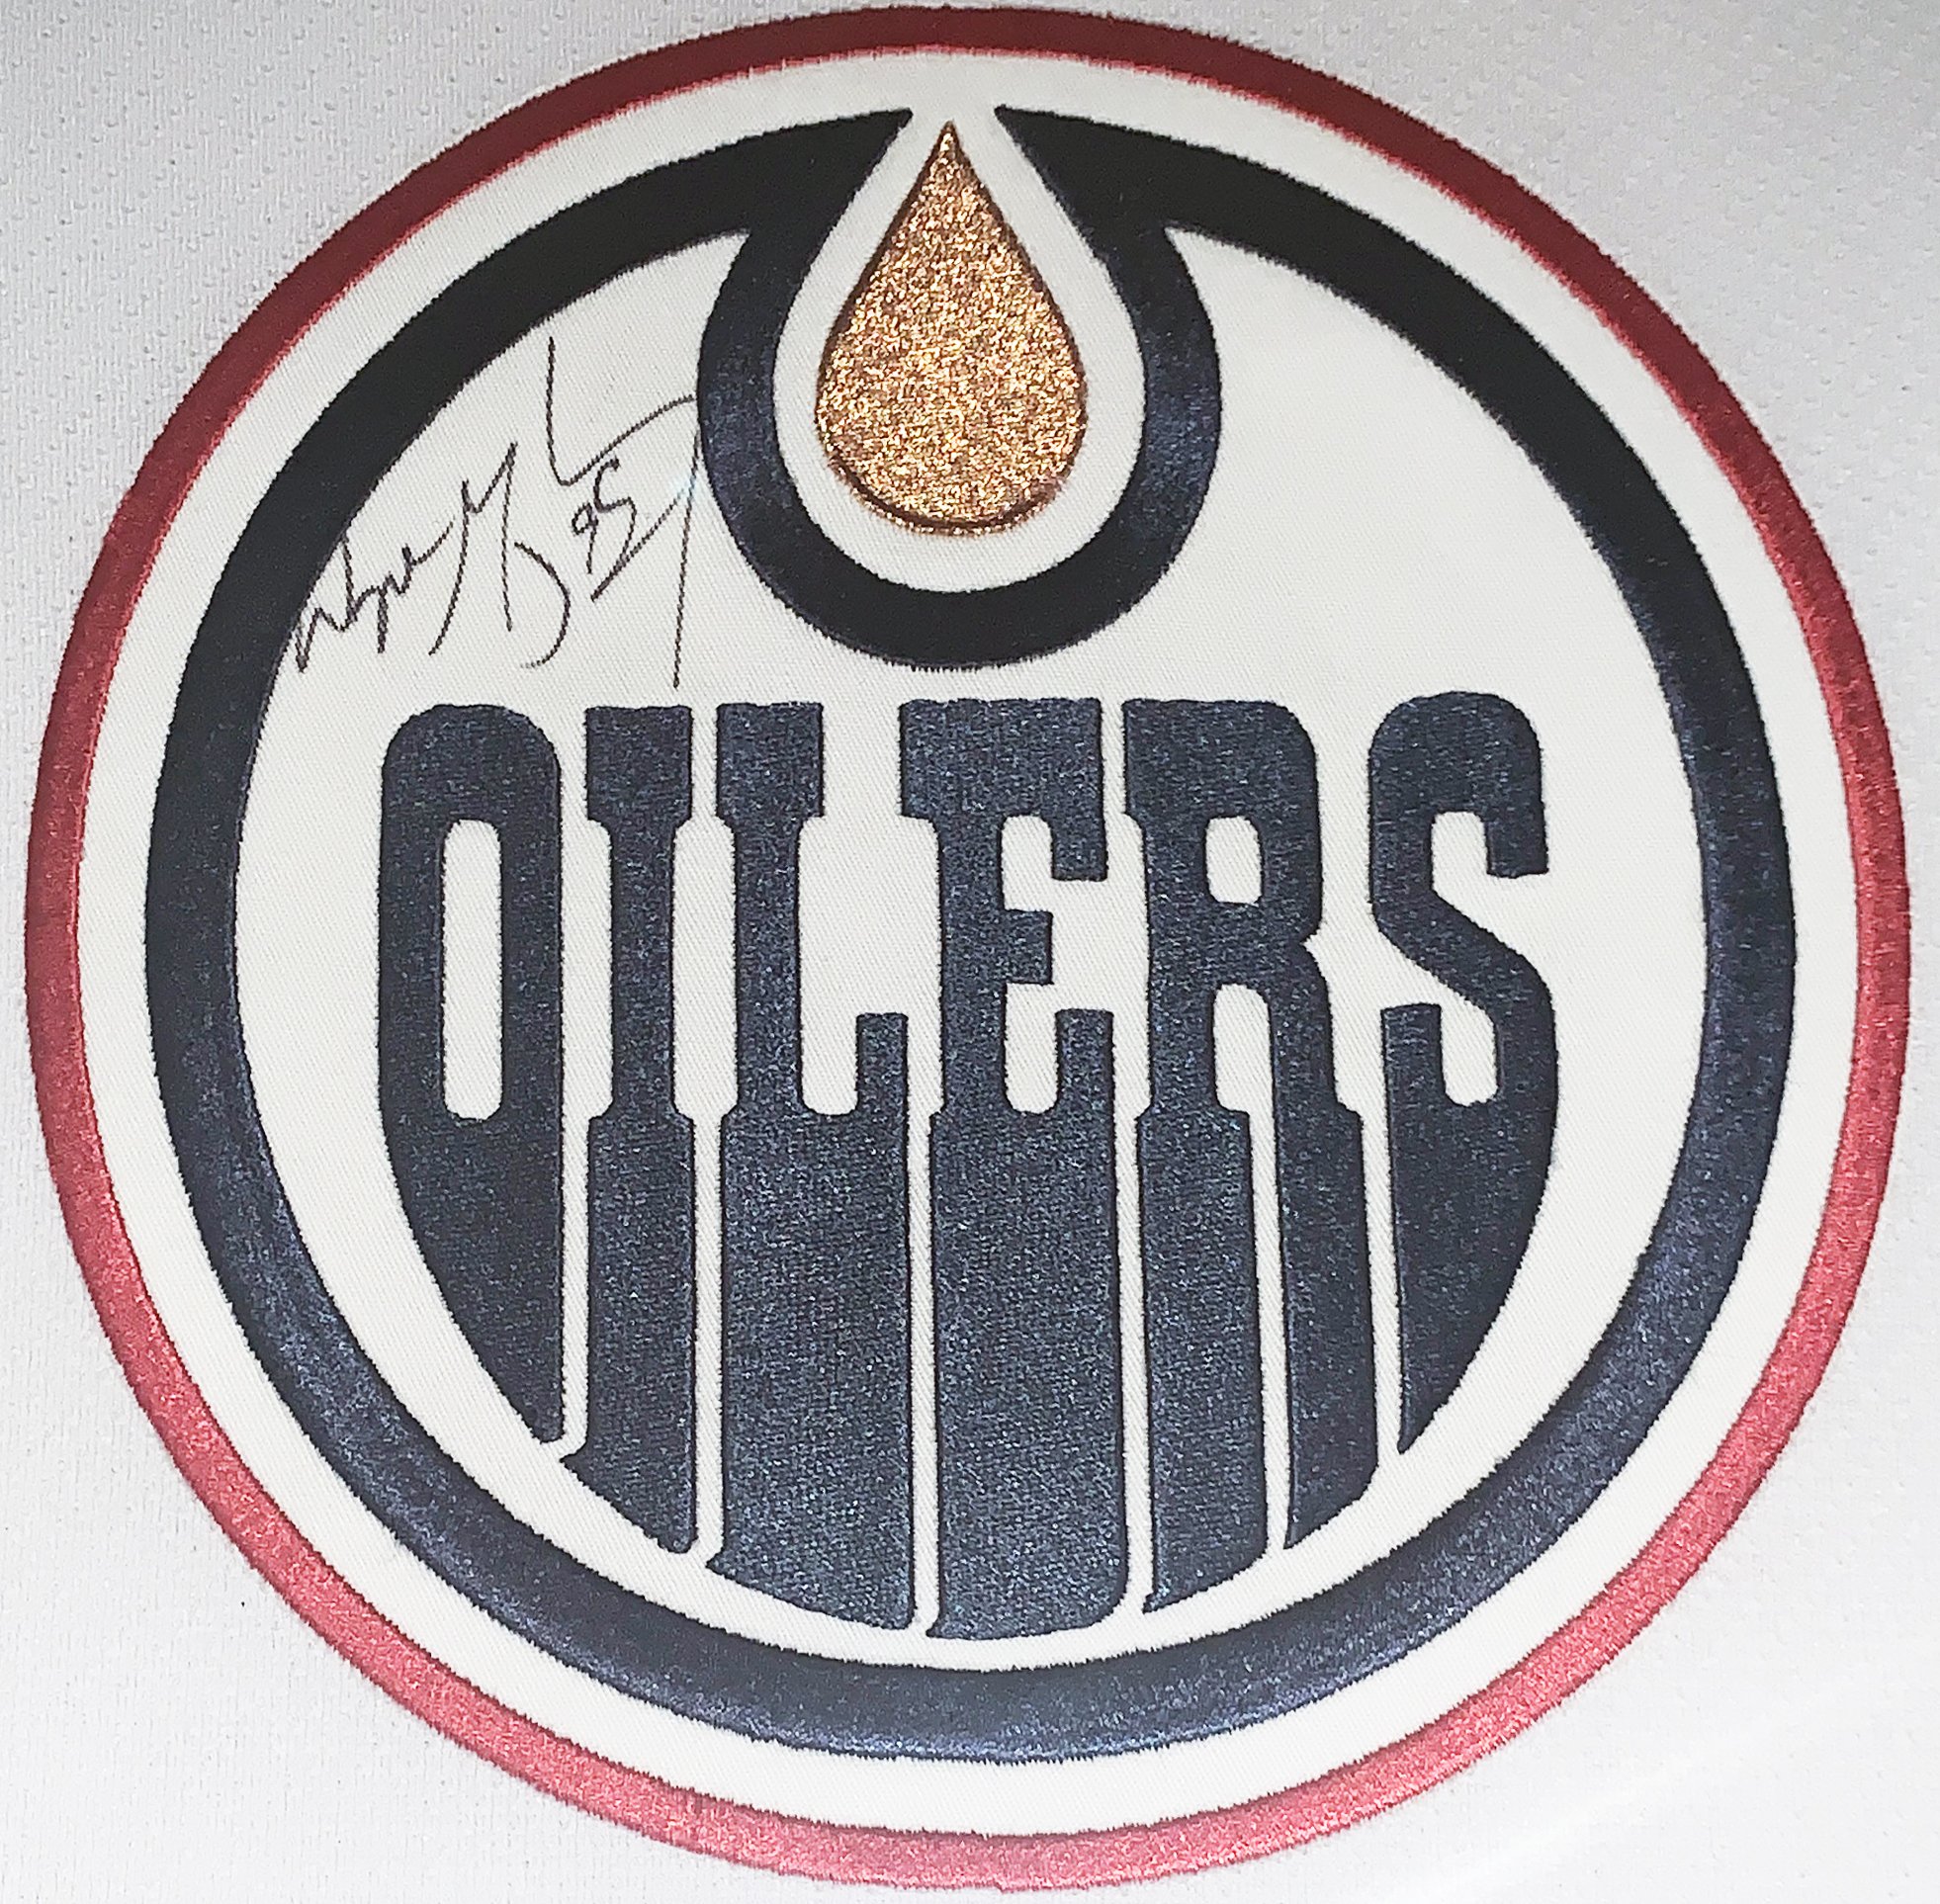 Wayne Gretzky Autographed CCM Edmonton Oilers Jersey w/ JSA COA